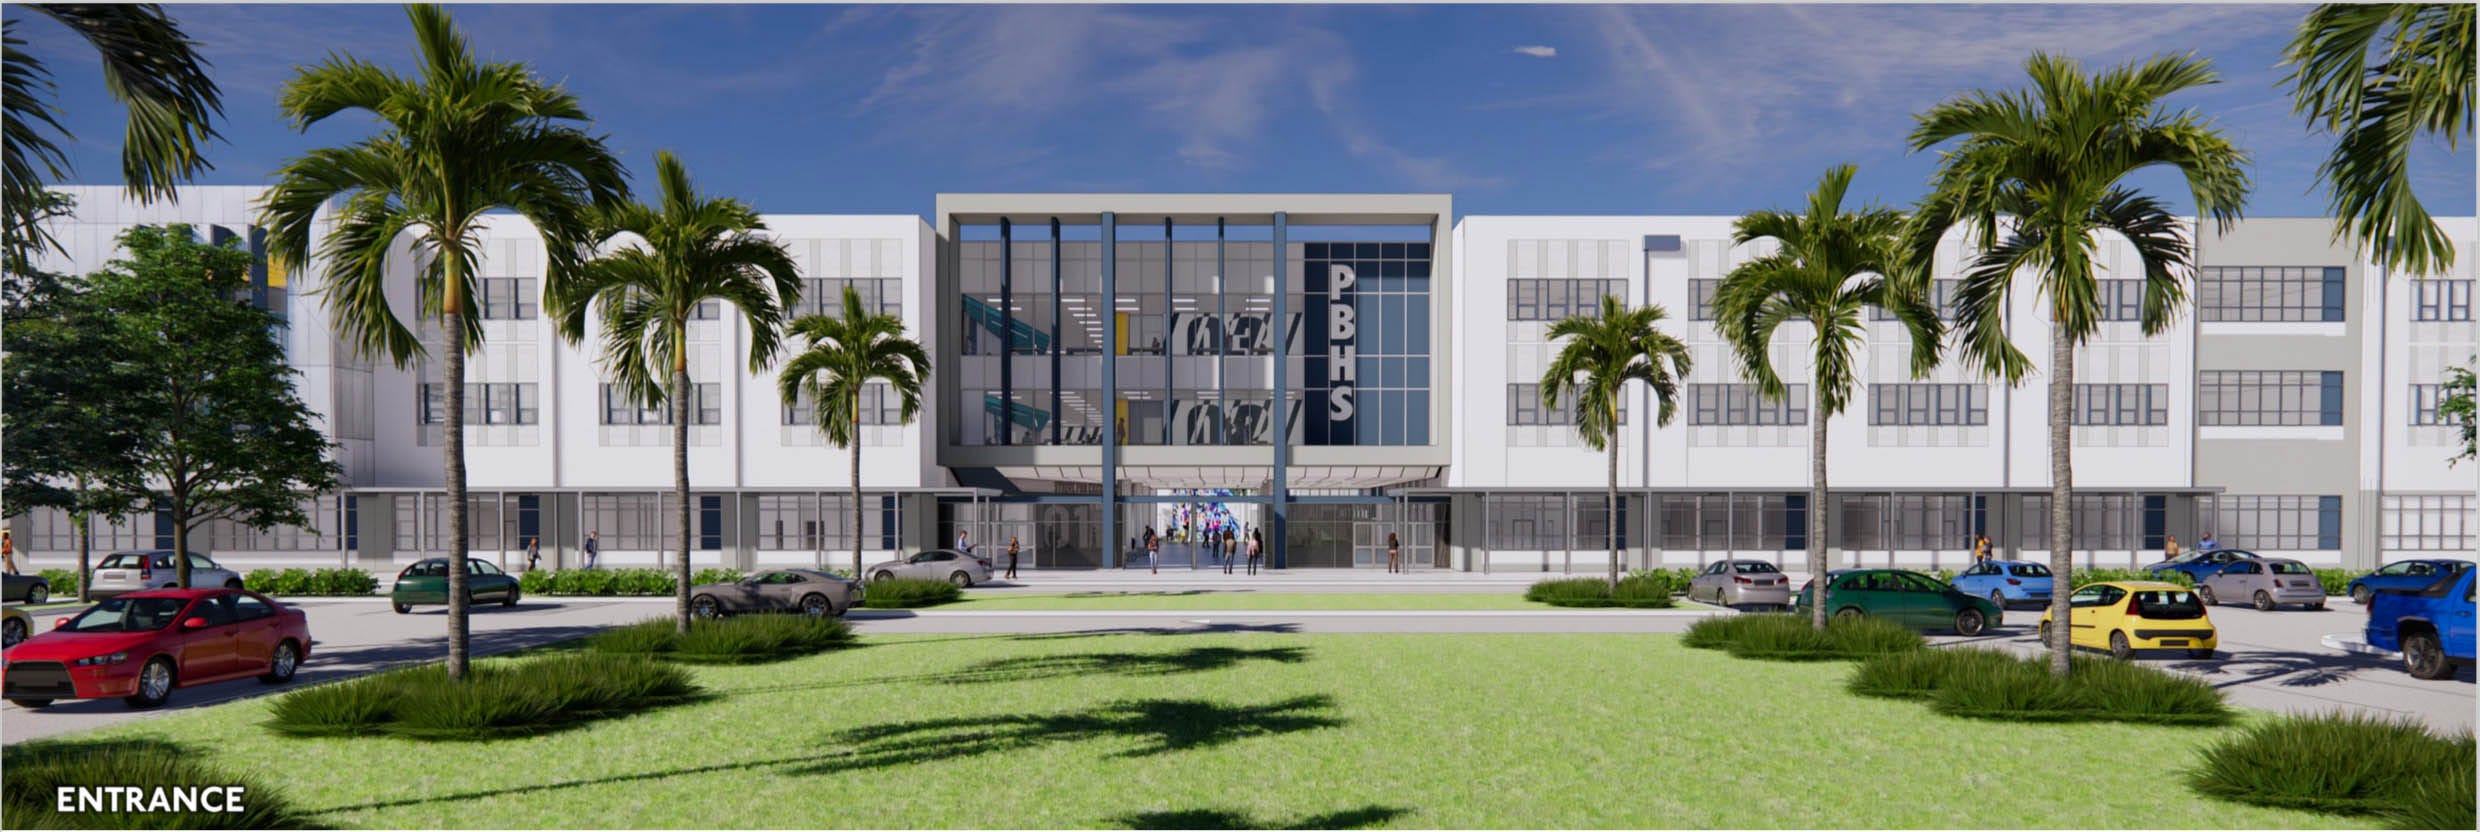 Palm Beach County's first new high school since '05 sees ground broken